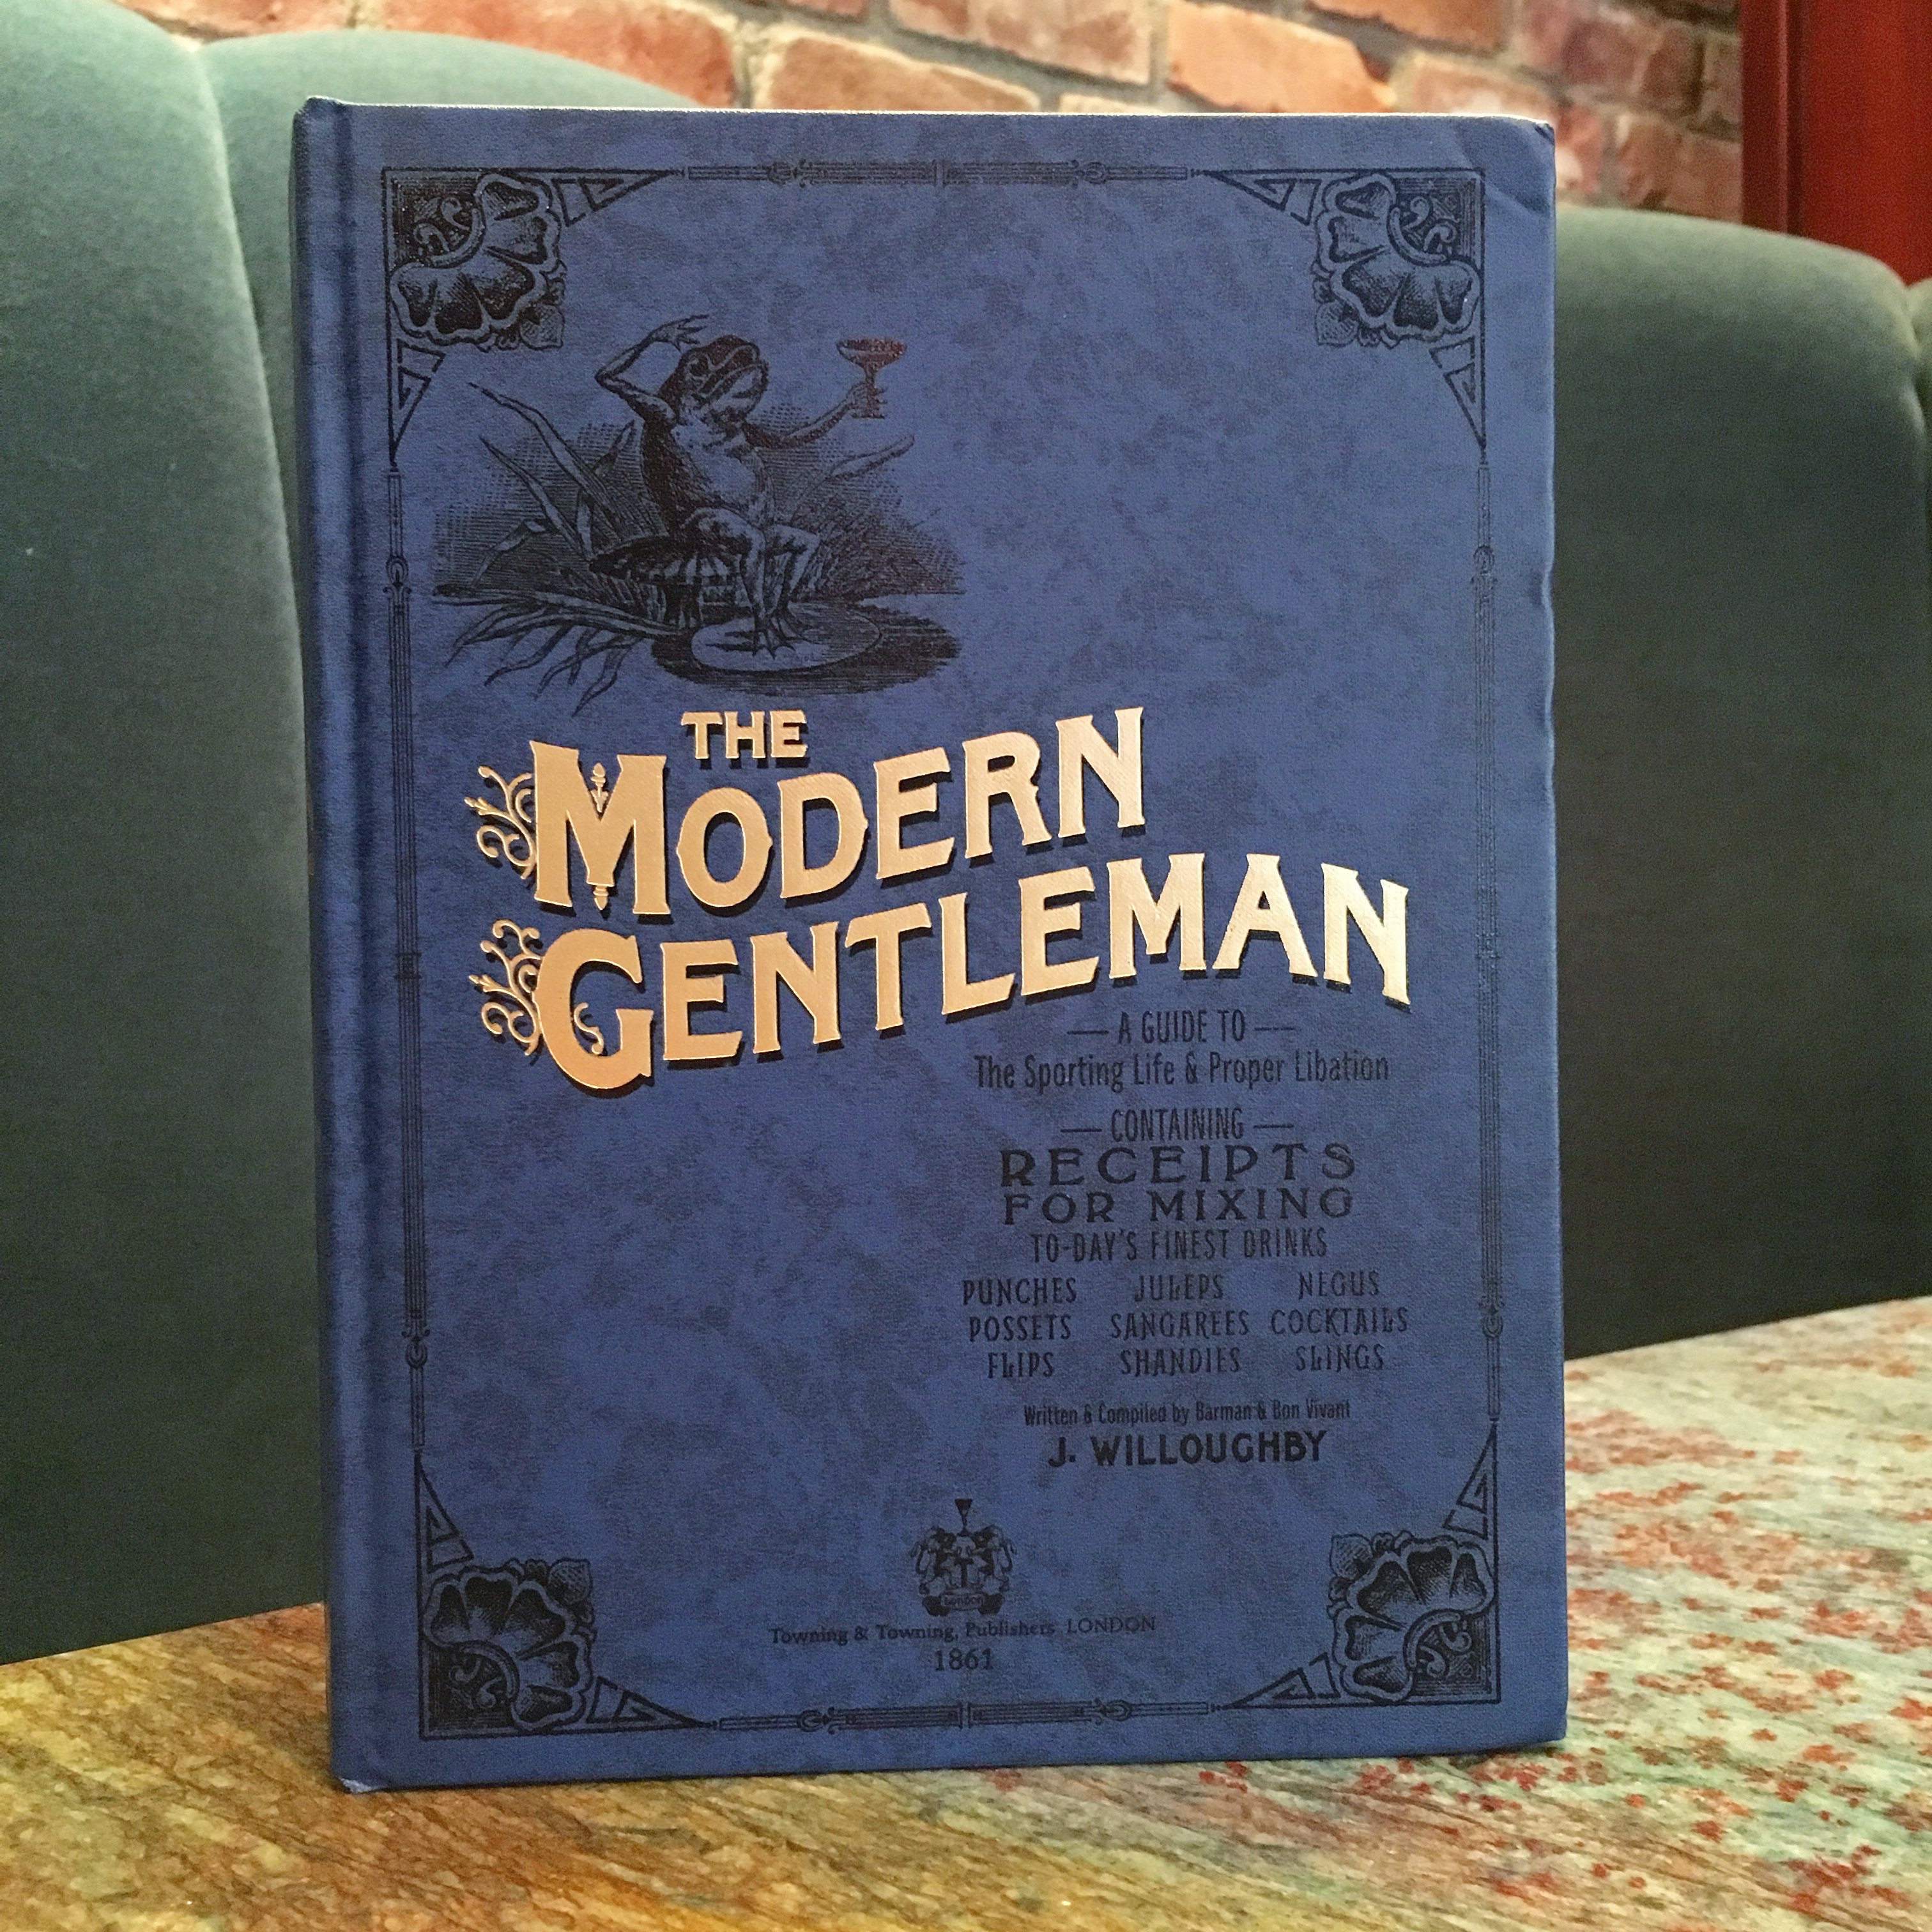 "The Modern Gentleman" menu at Club 33 by Wexler of California